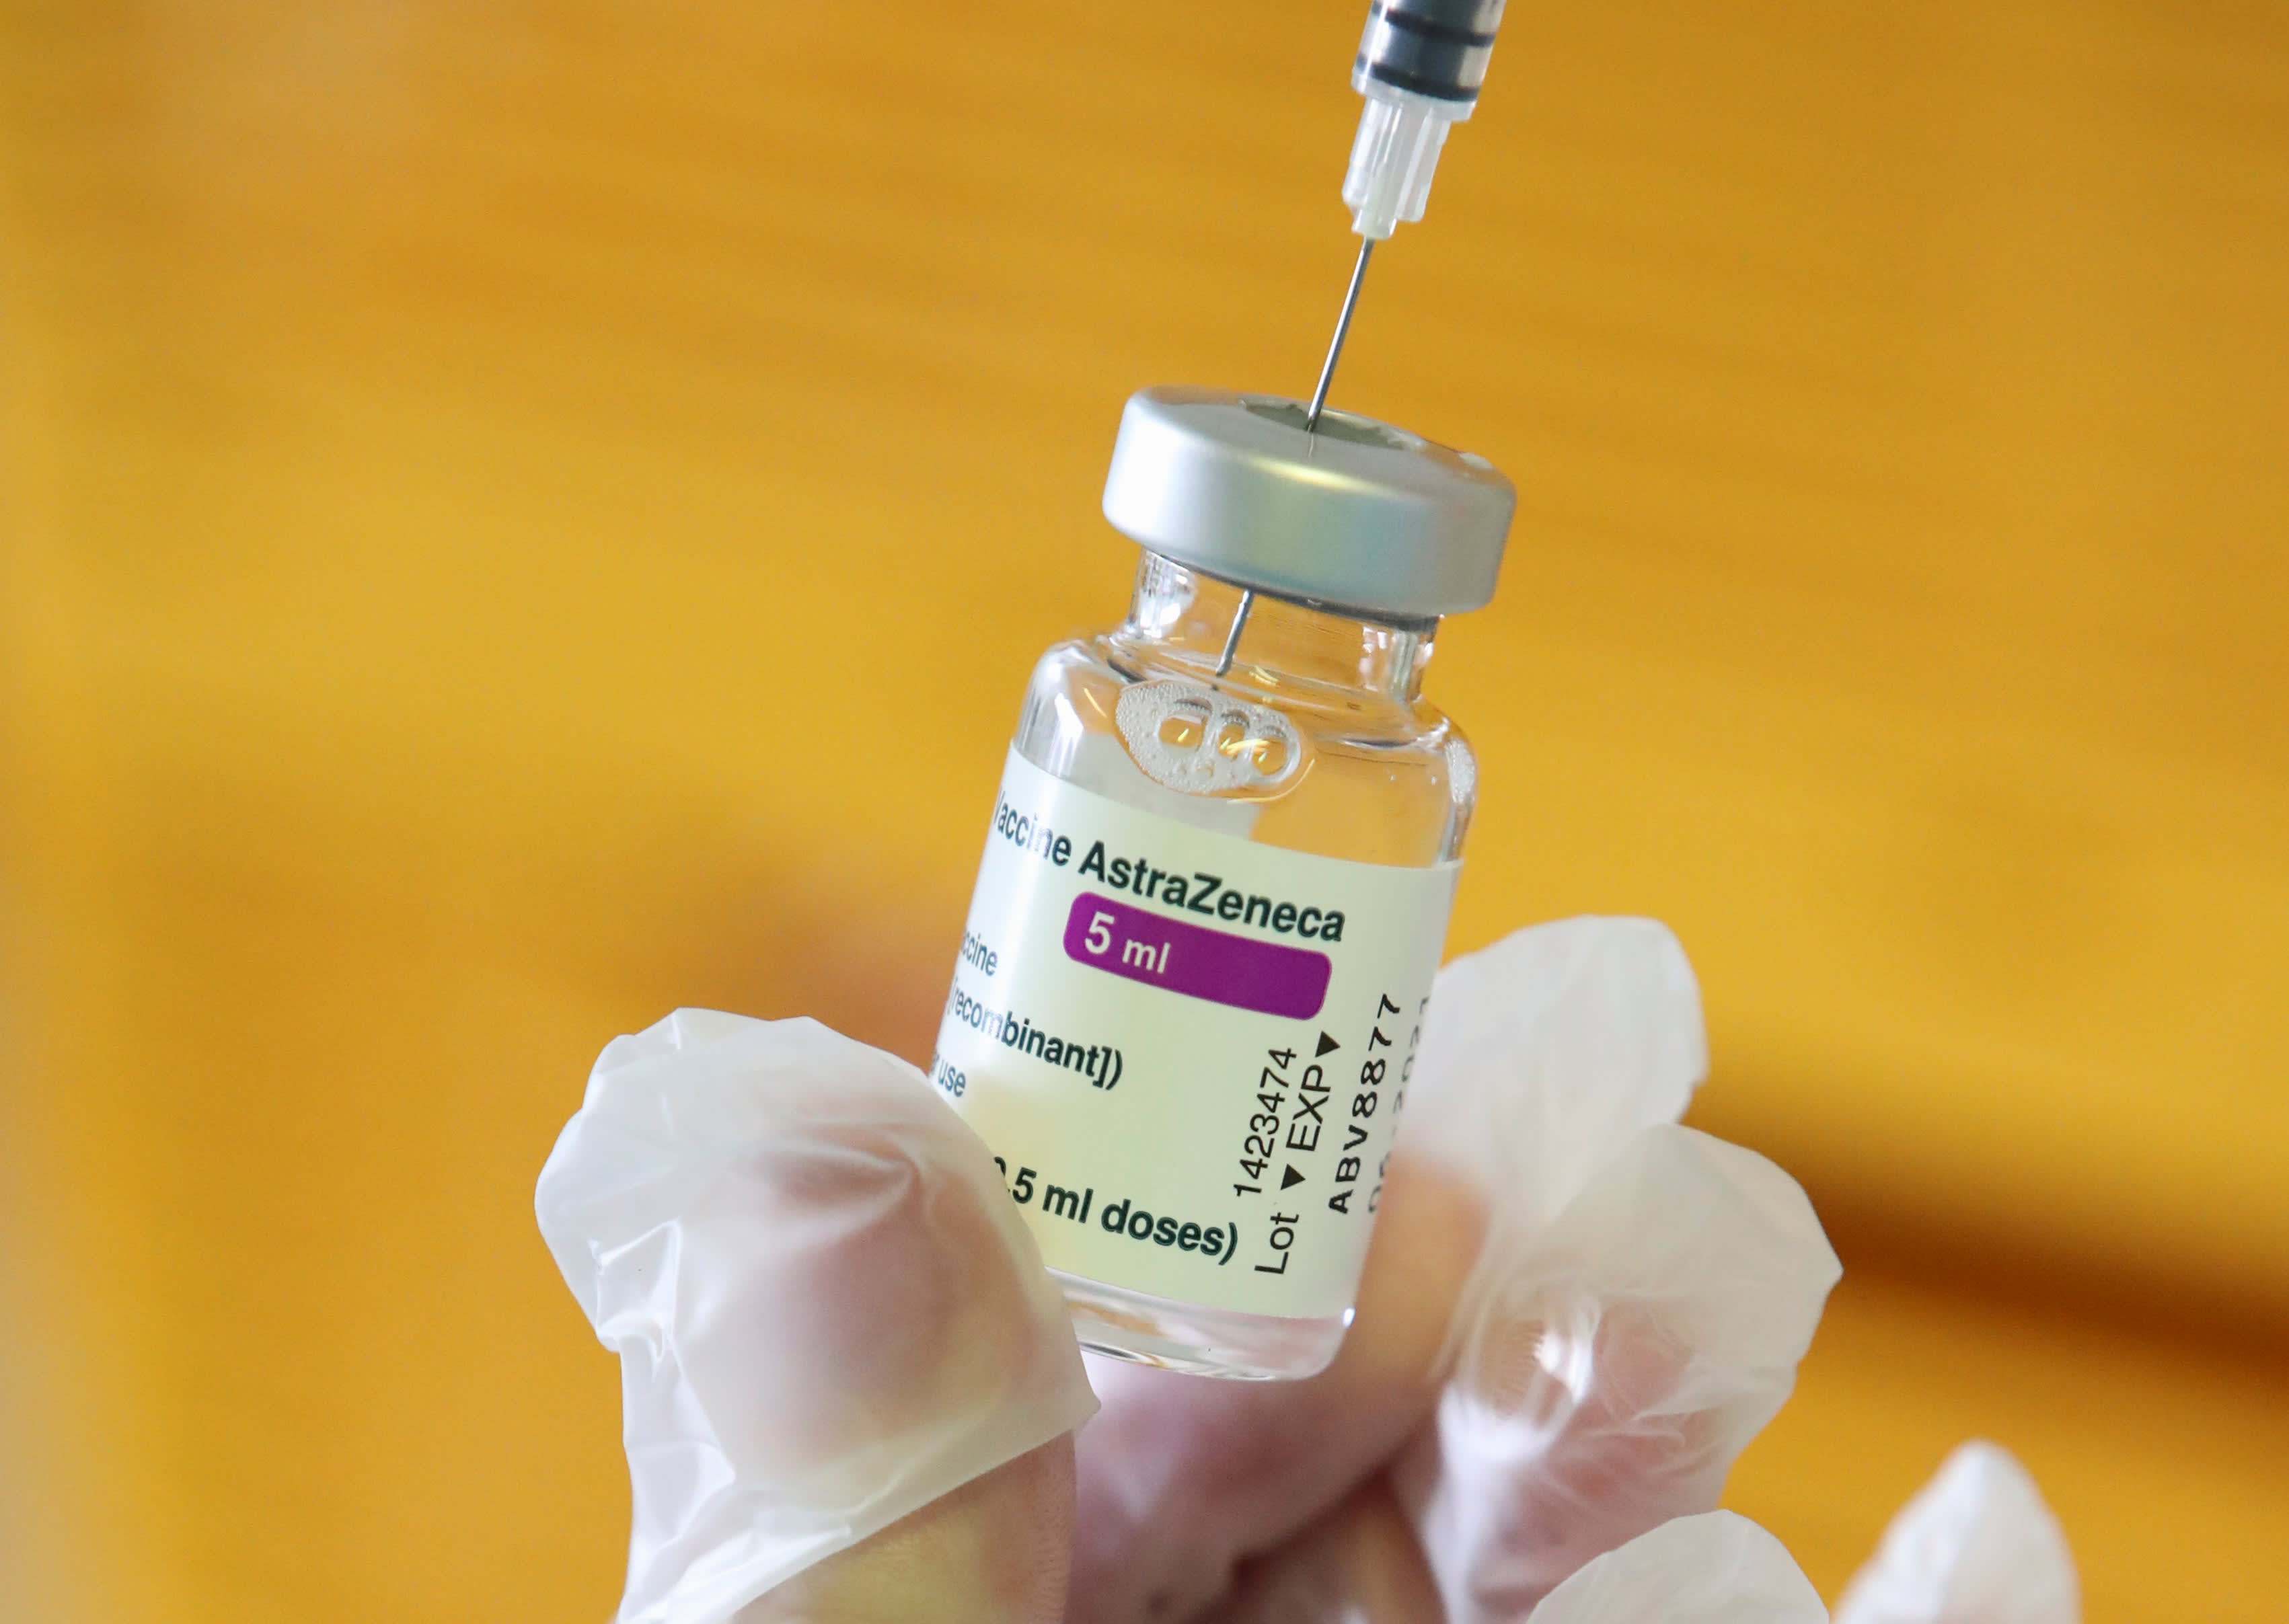 EU prepares lawsuit against AstraZeneca over vaccine administration issues